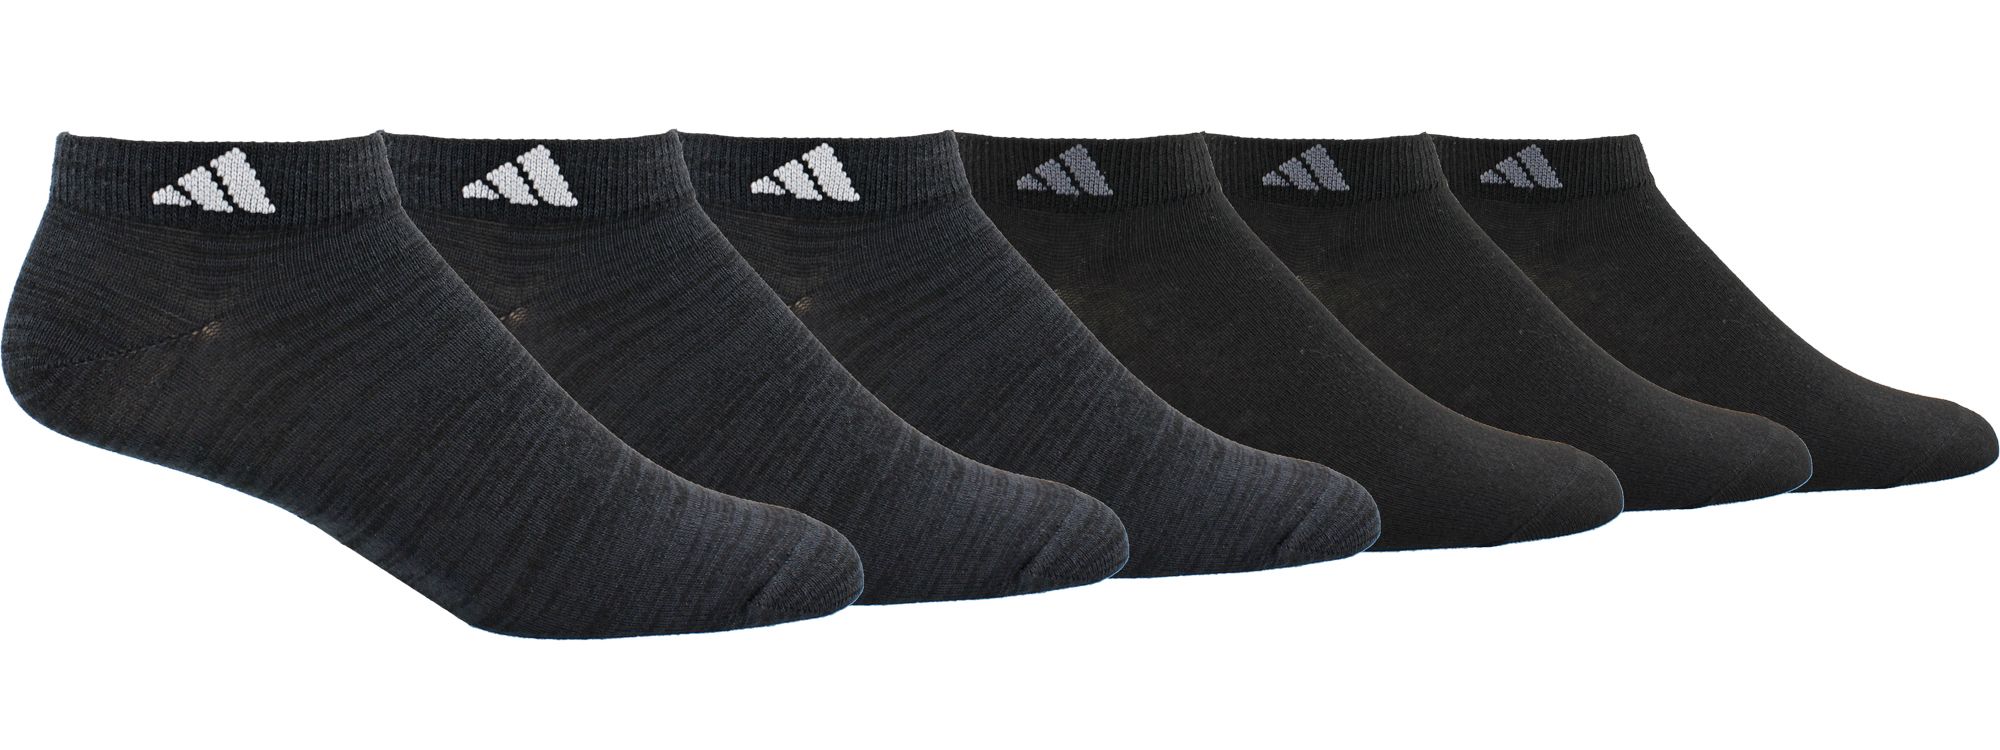 adidas men's superlite socks